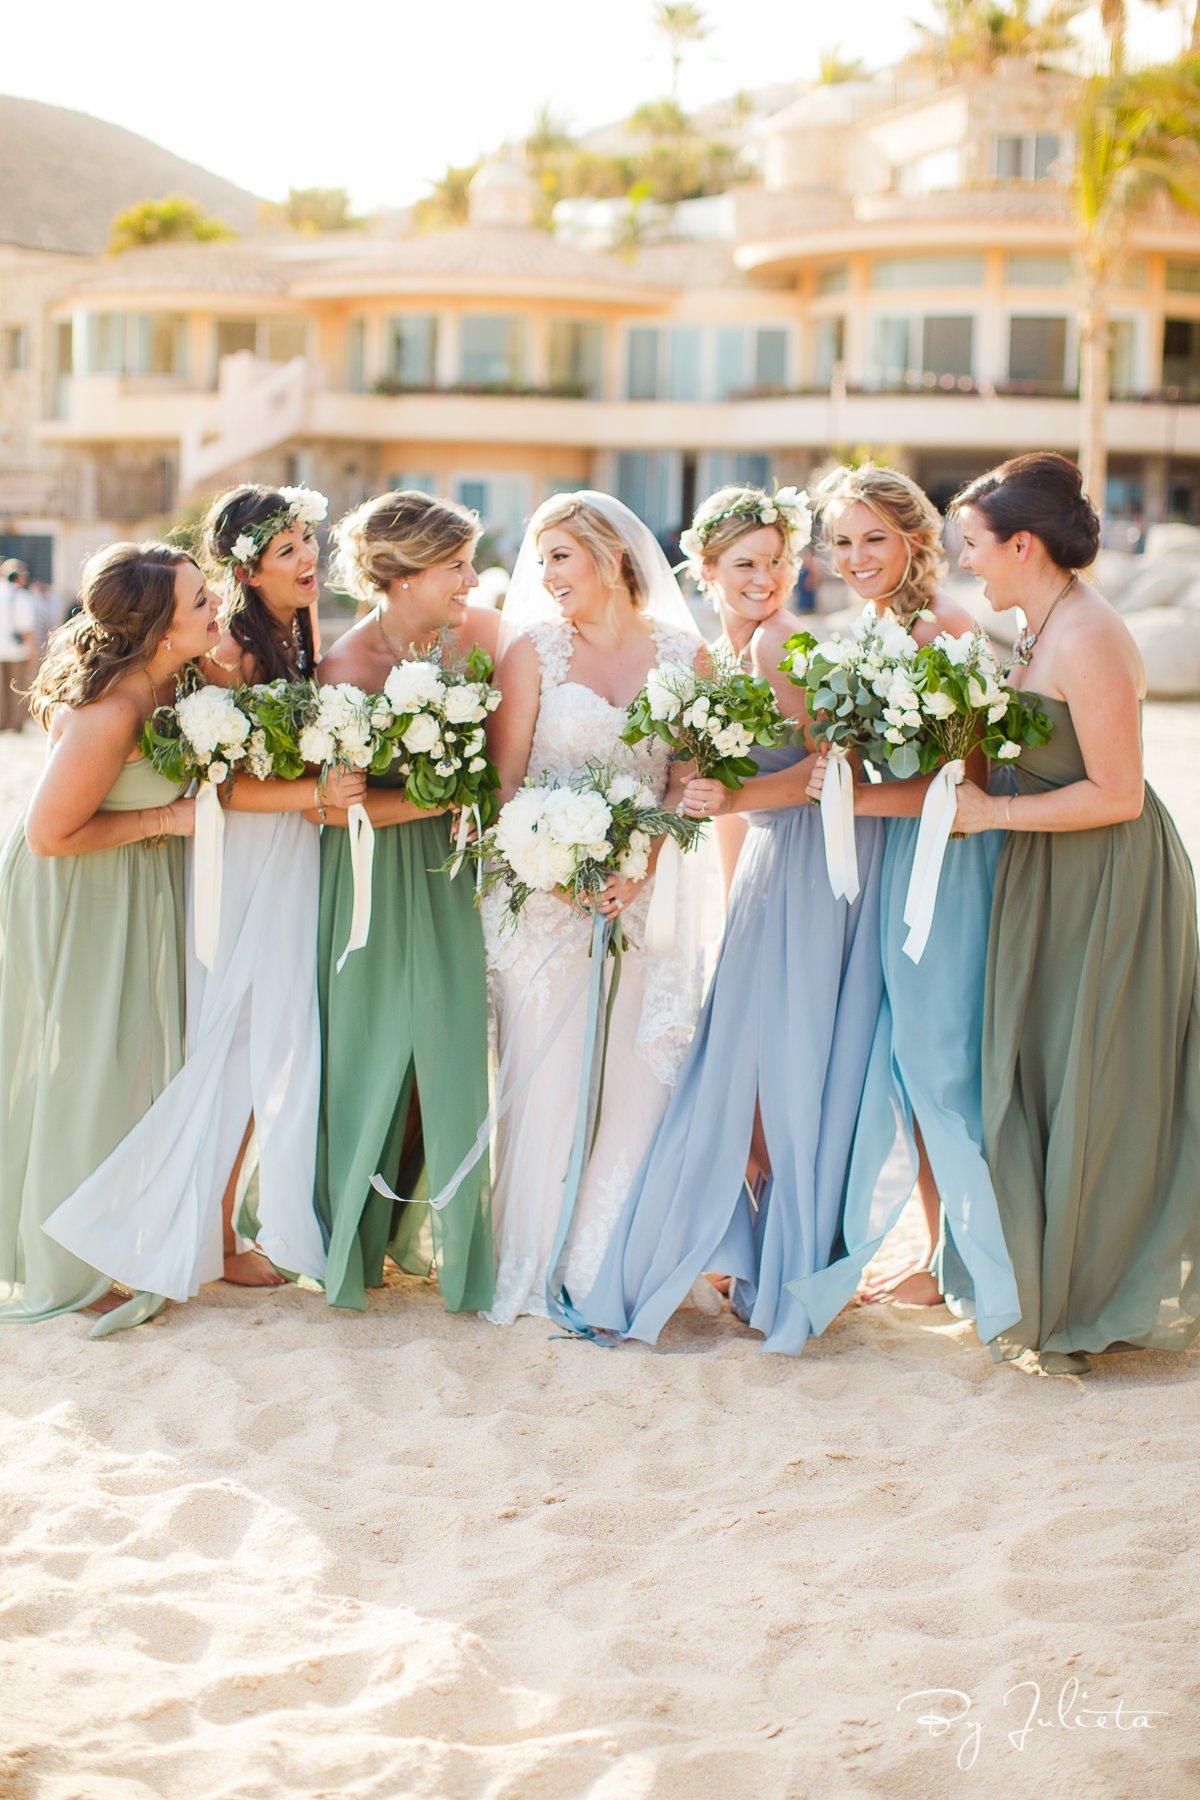 Vibrant Colour: Unique Mint Green Bridesmaid Dresses